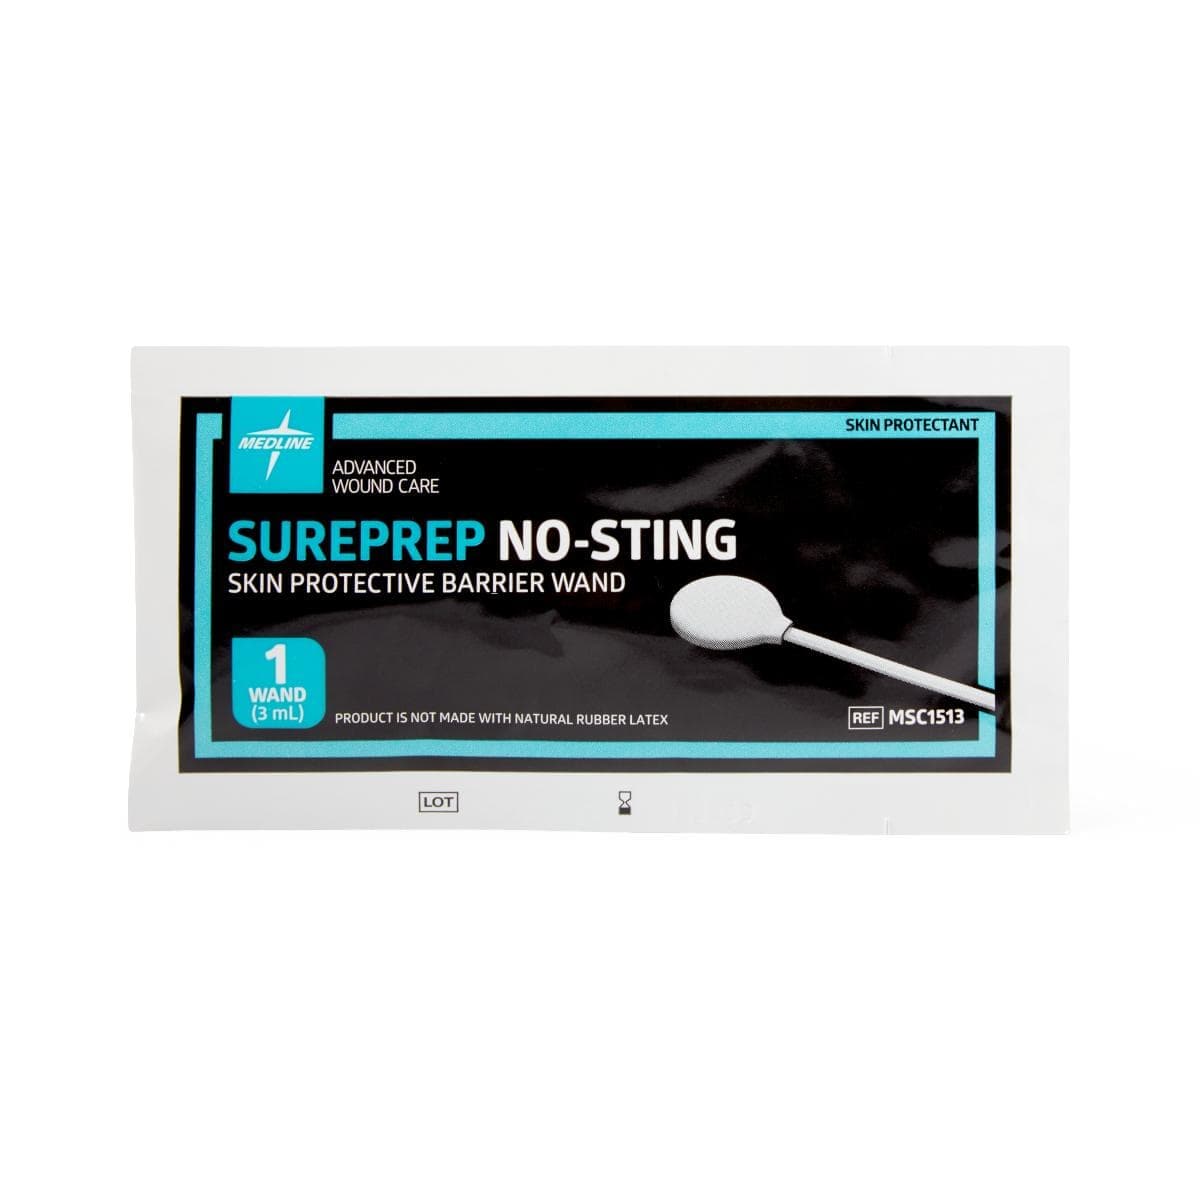 Medline Single Item / 3ML Medline Sureprep No-Sting Skin Protectant